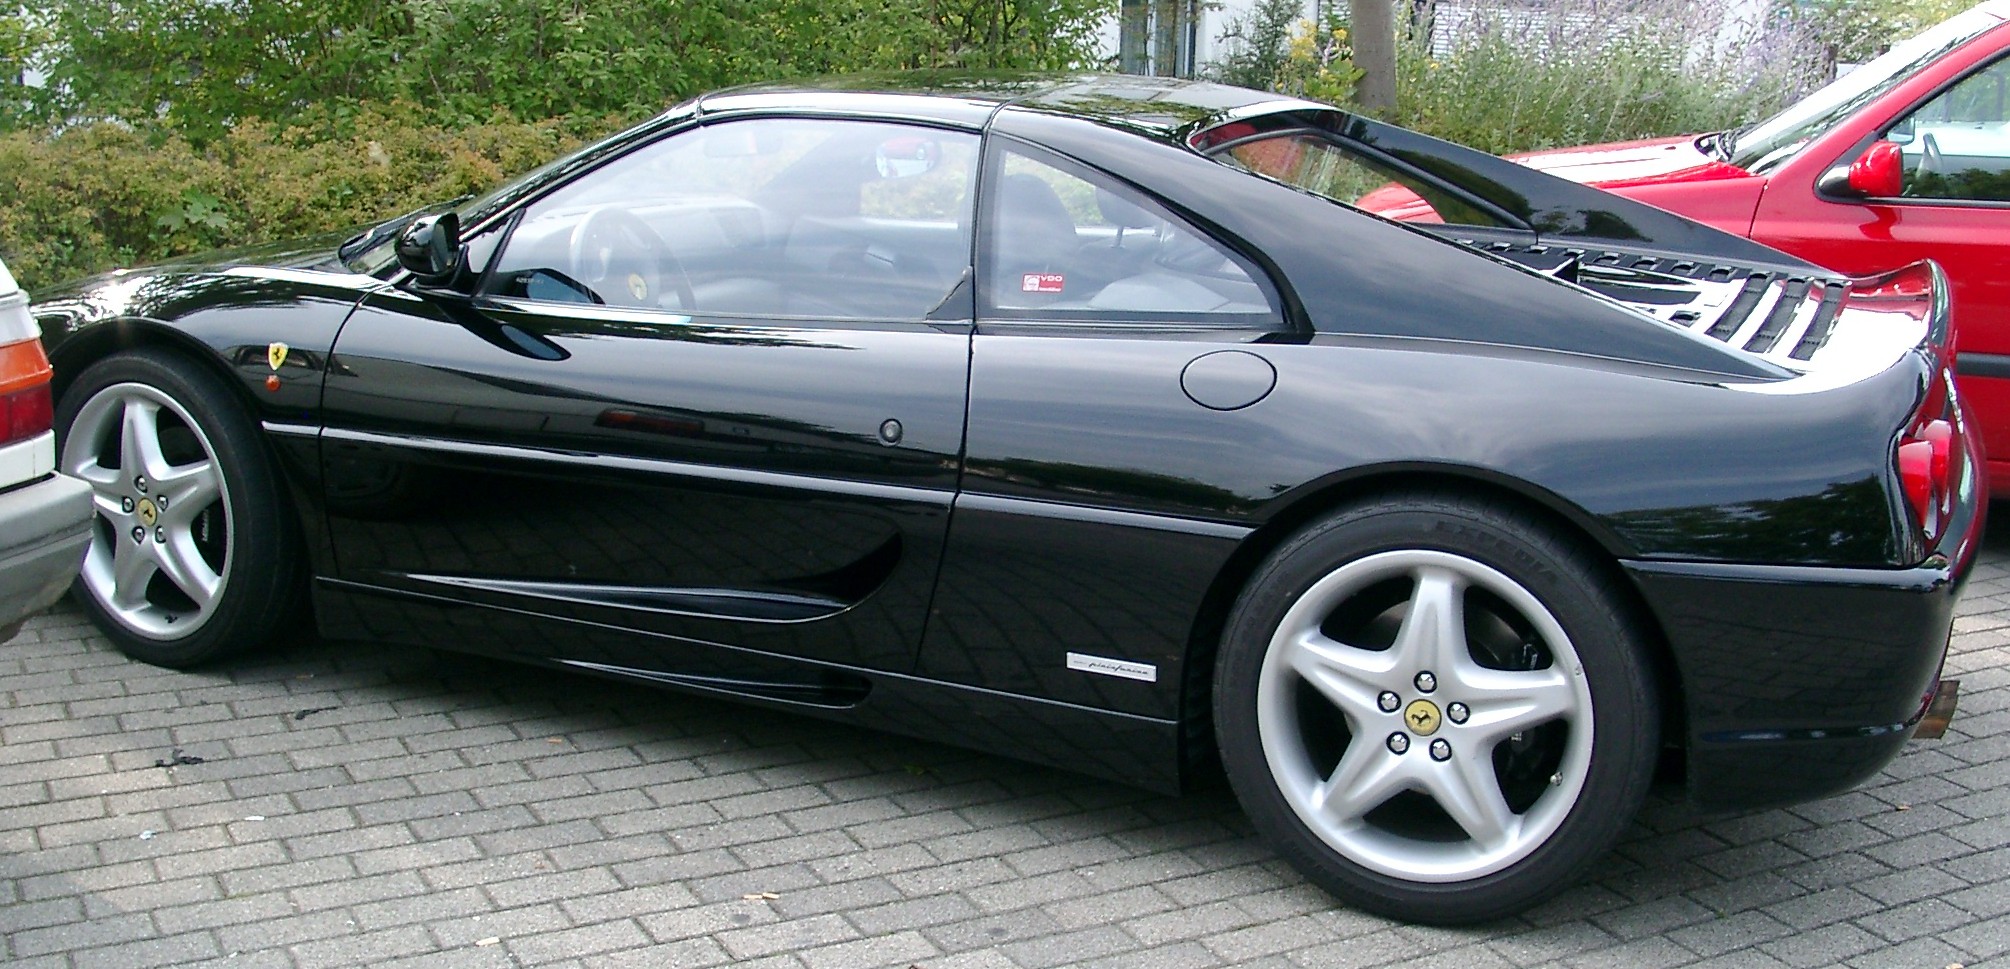 Ferrari 355 GTS